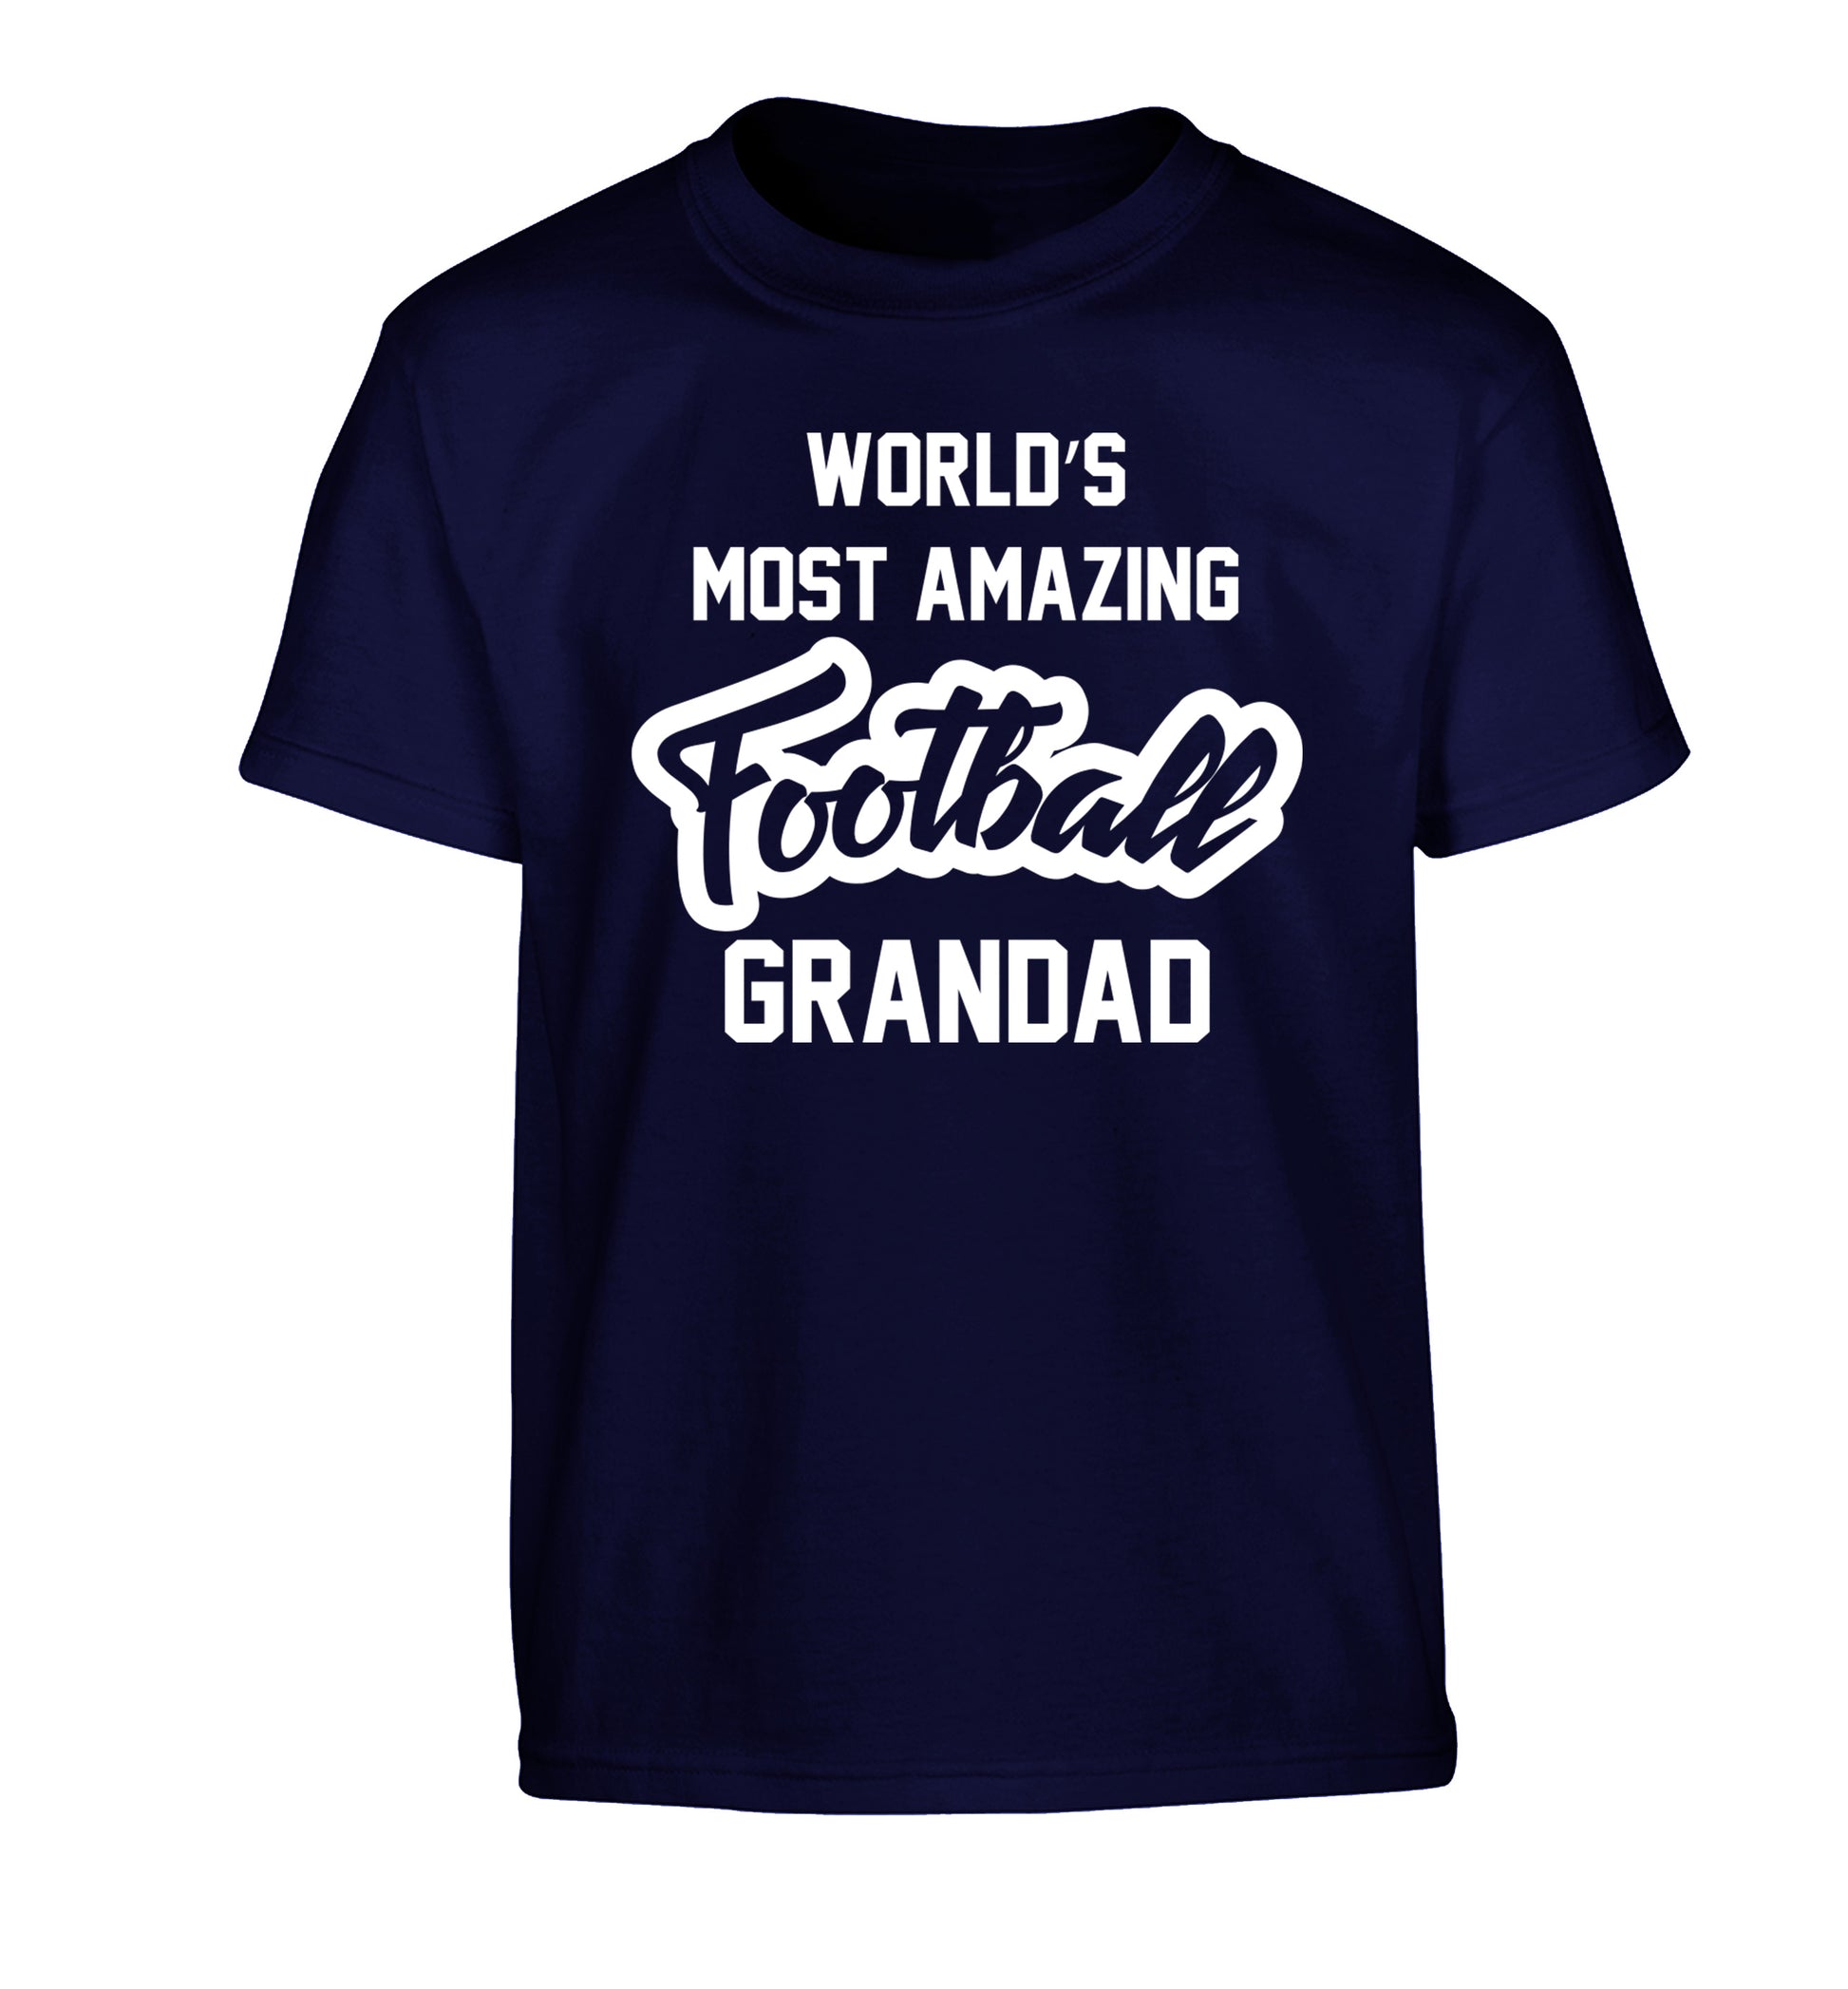 Worlds most amazing football grandad Children's navy Tshirt 12-14 Years